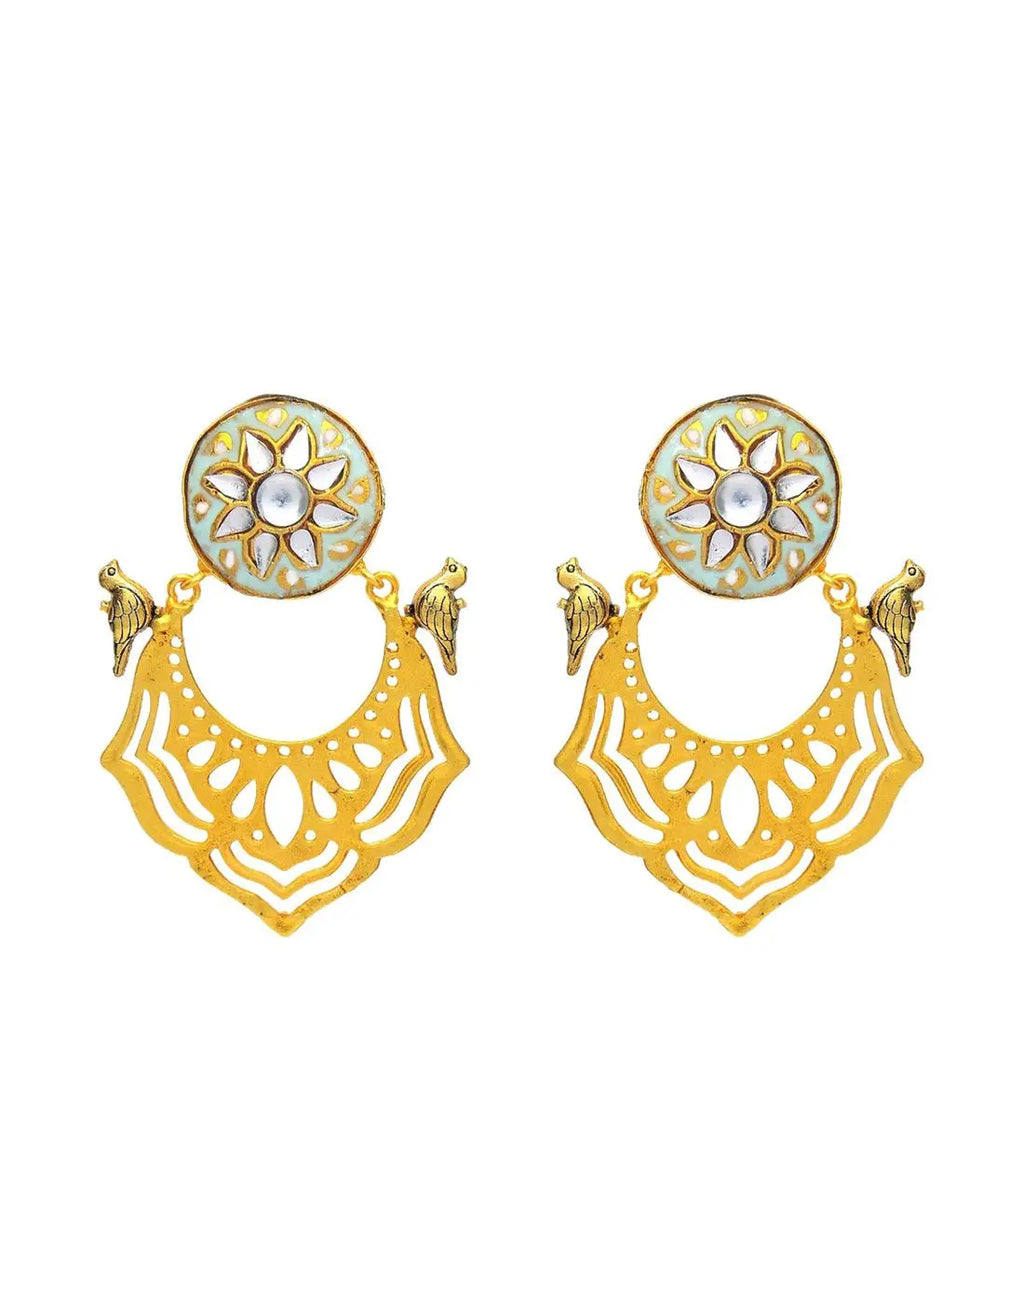 Avia Earrings (Sky)- Handcrafted Jewellery from Dori